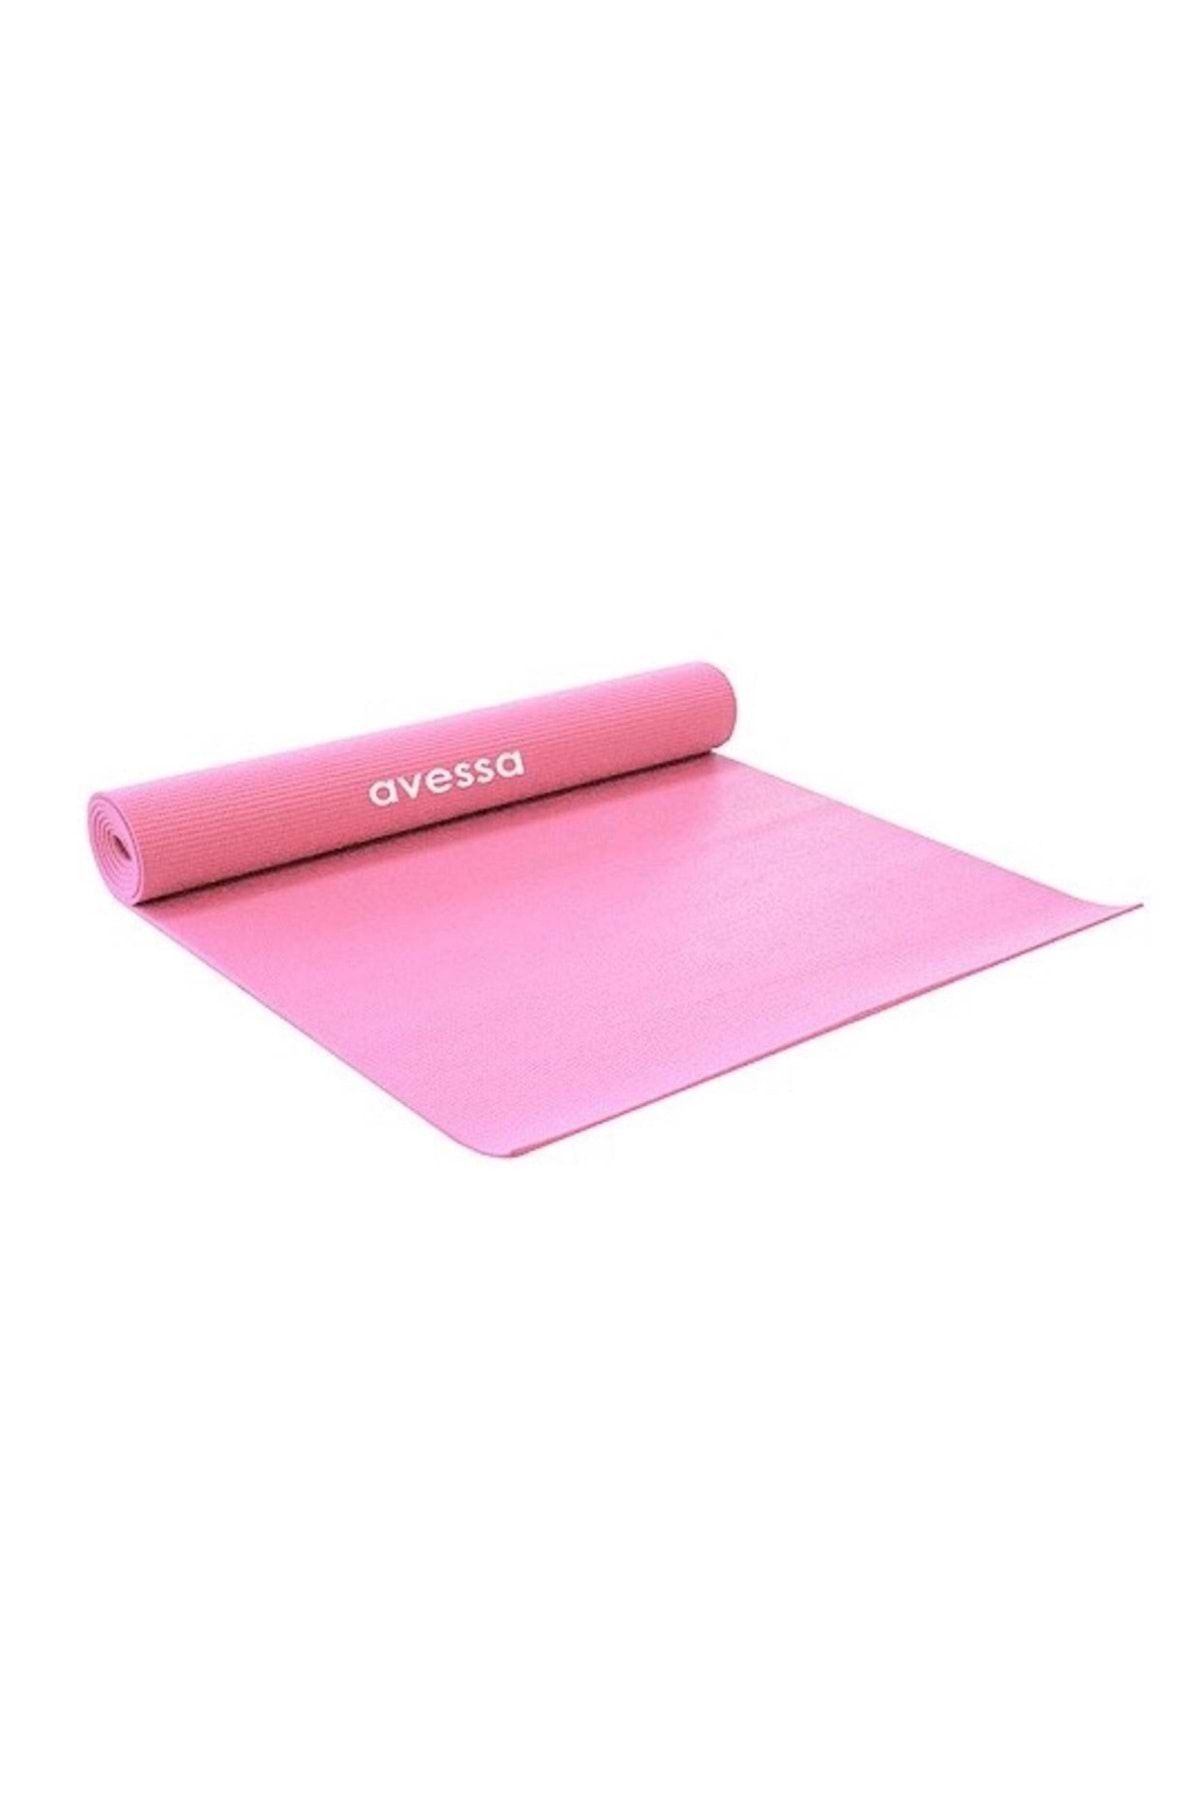 Avessa 0.40cm Eva Yoga-mat Pilates Minderi